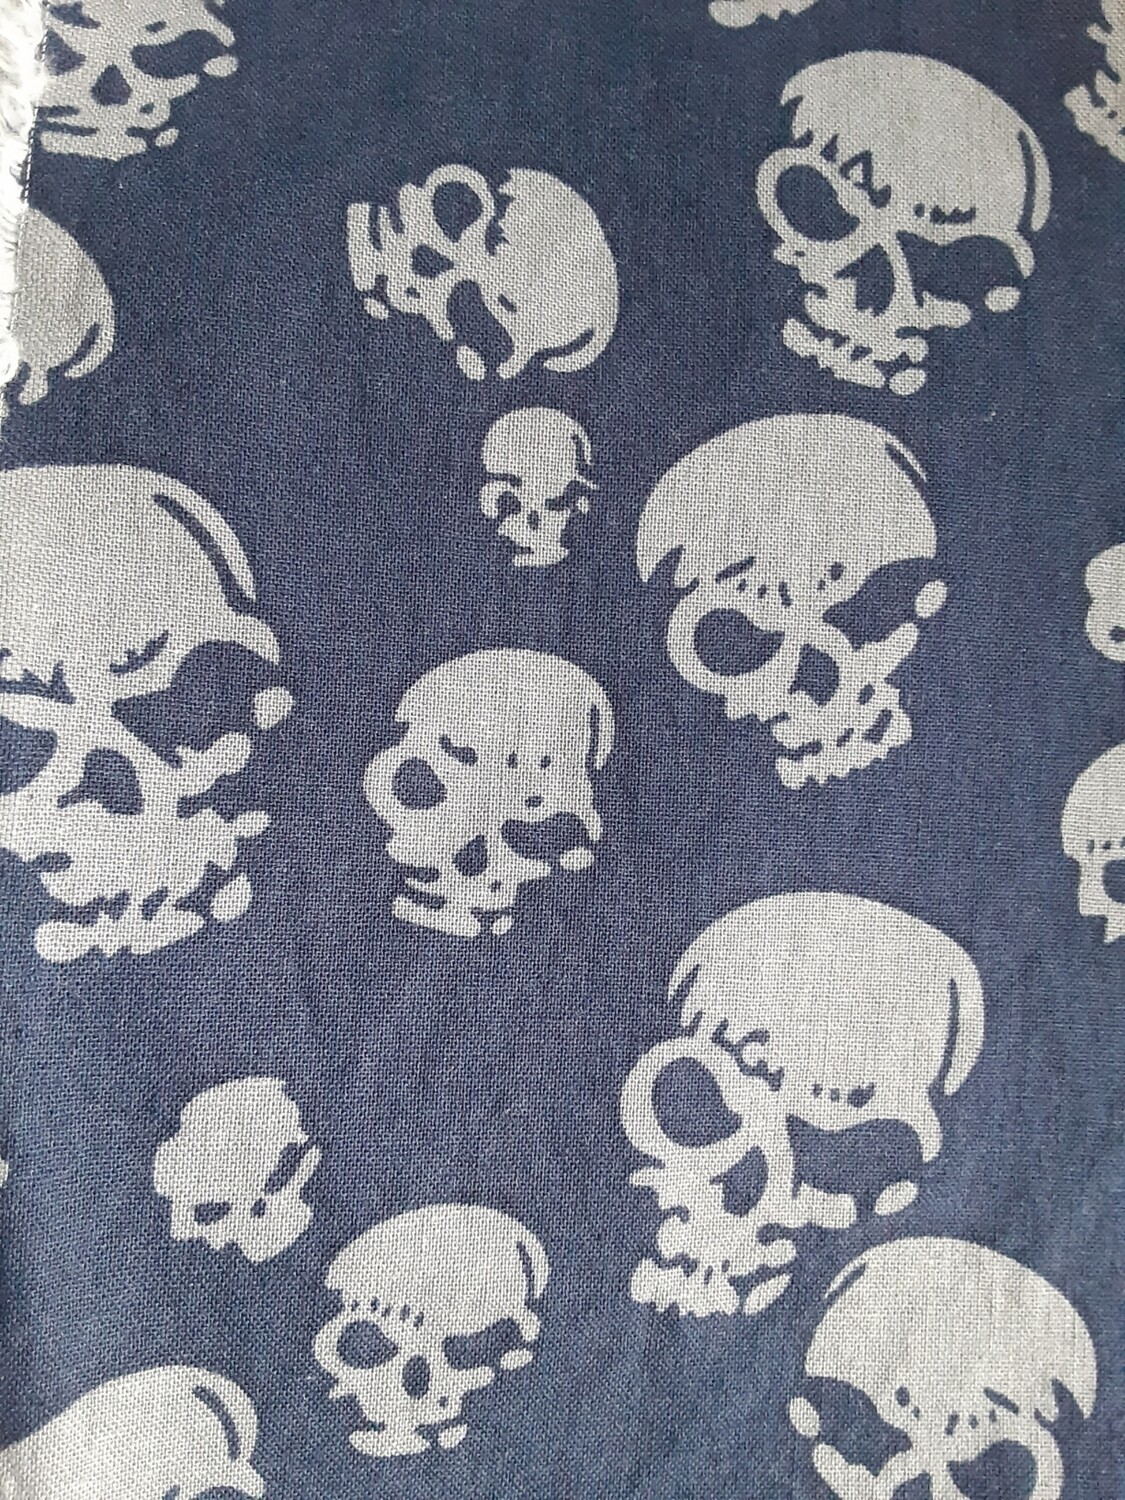 Stamped skulls on navy